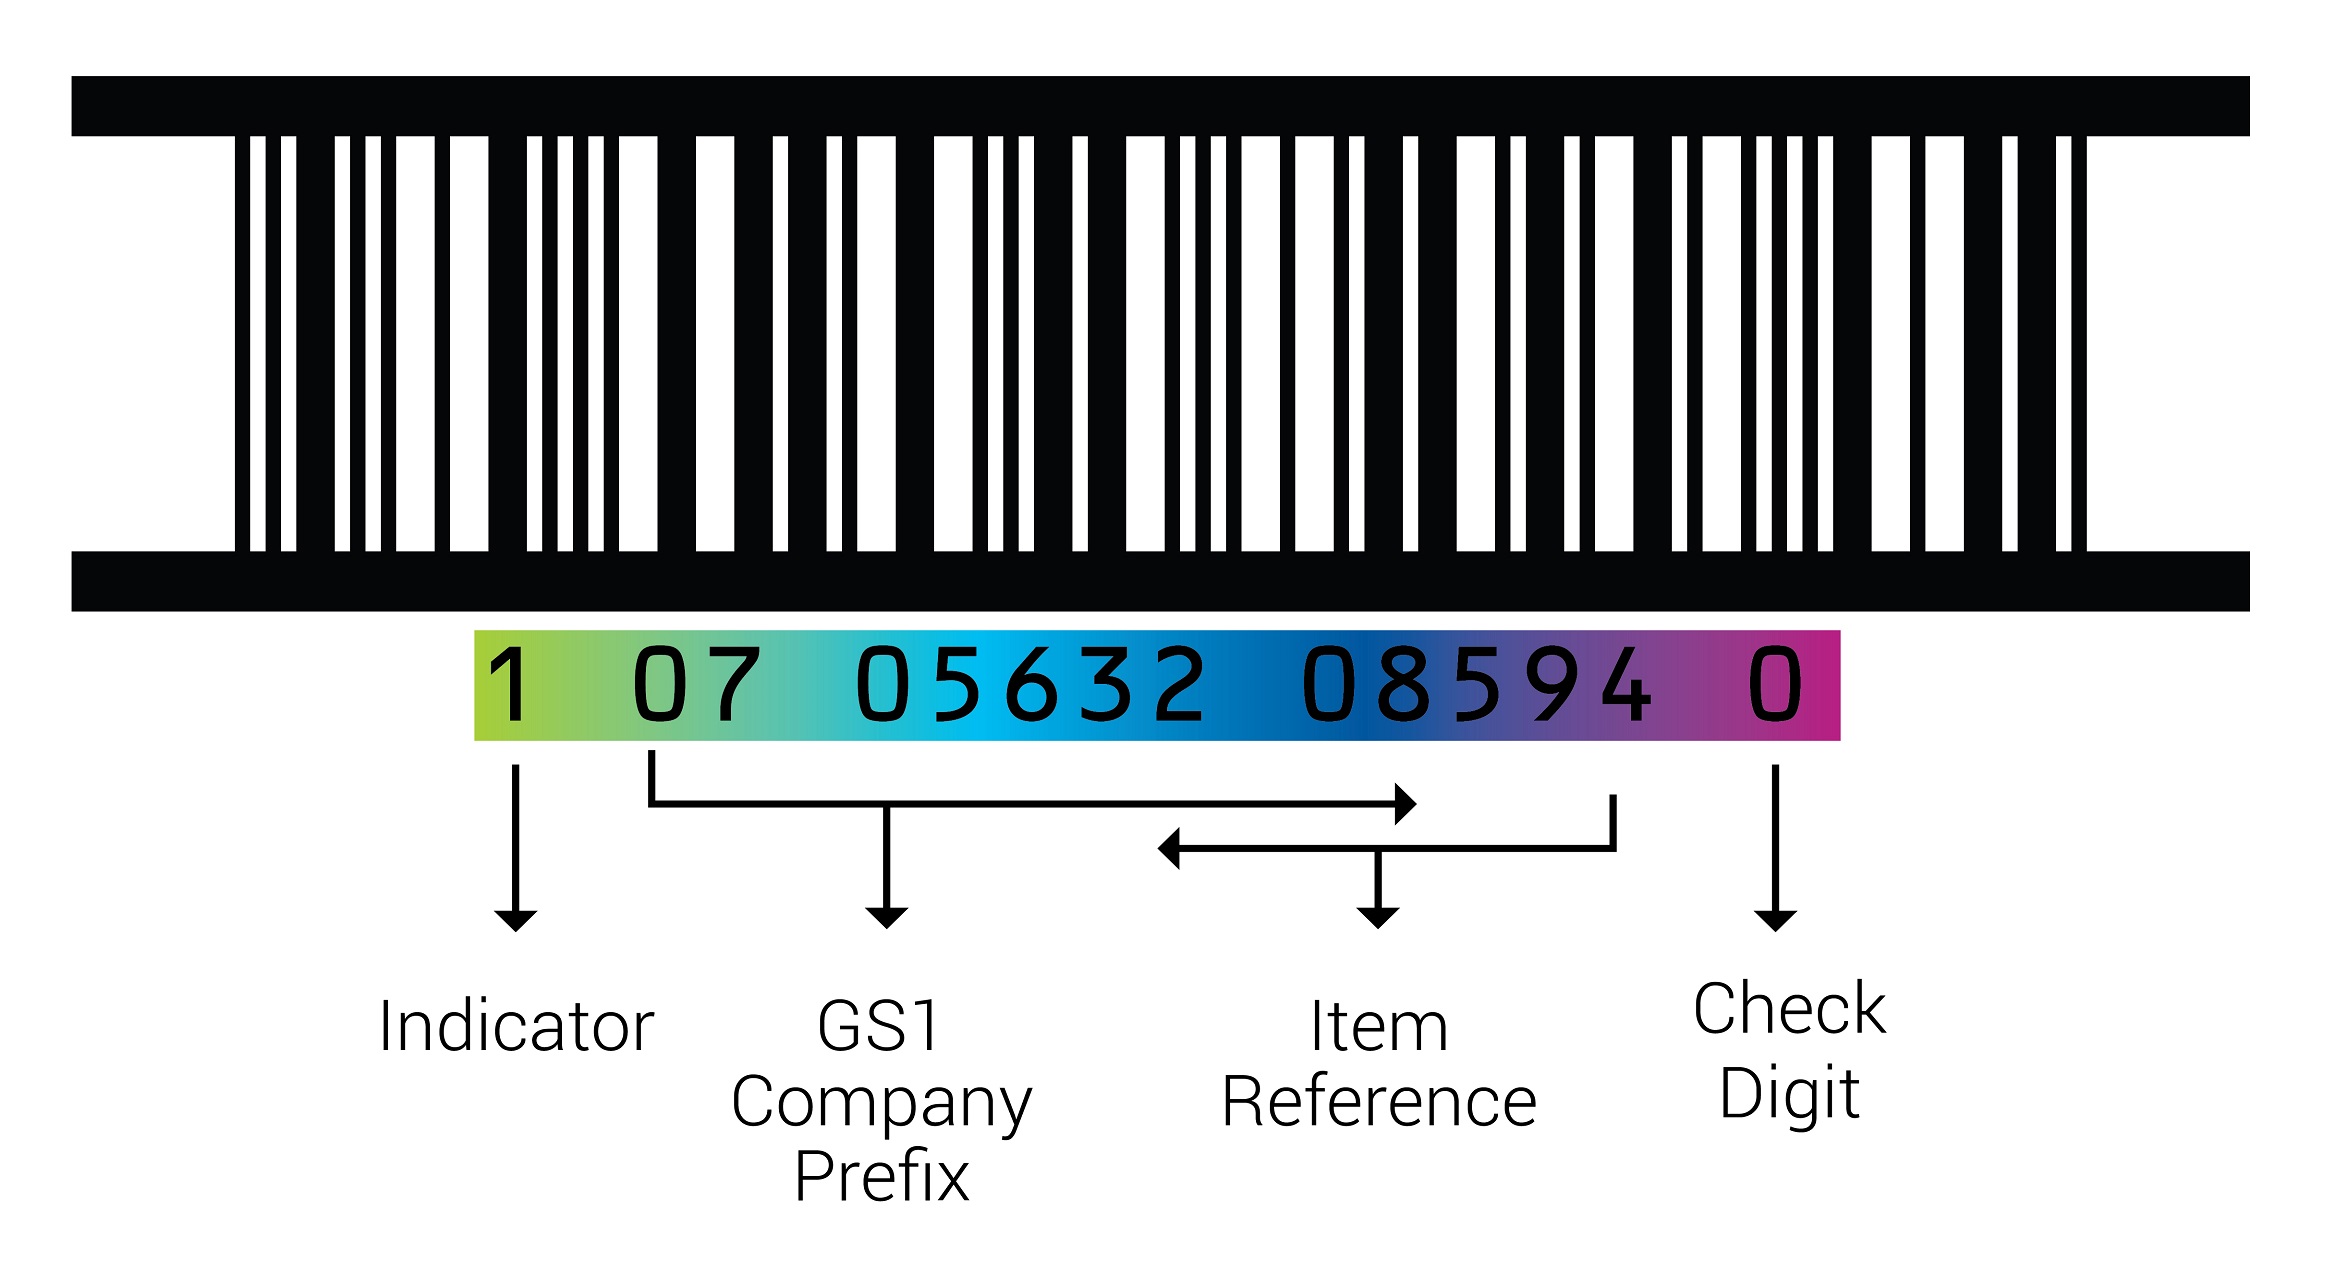 breaking down the carton barcode